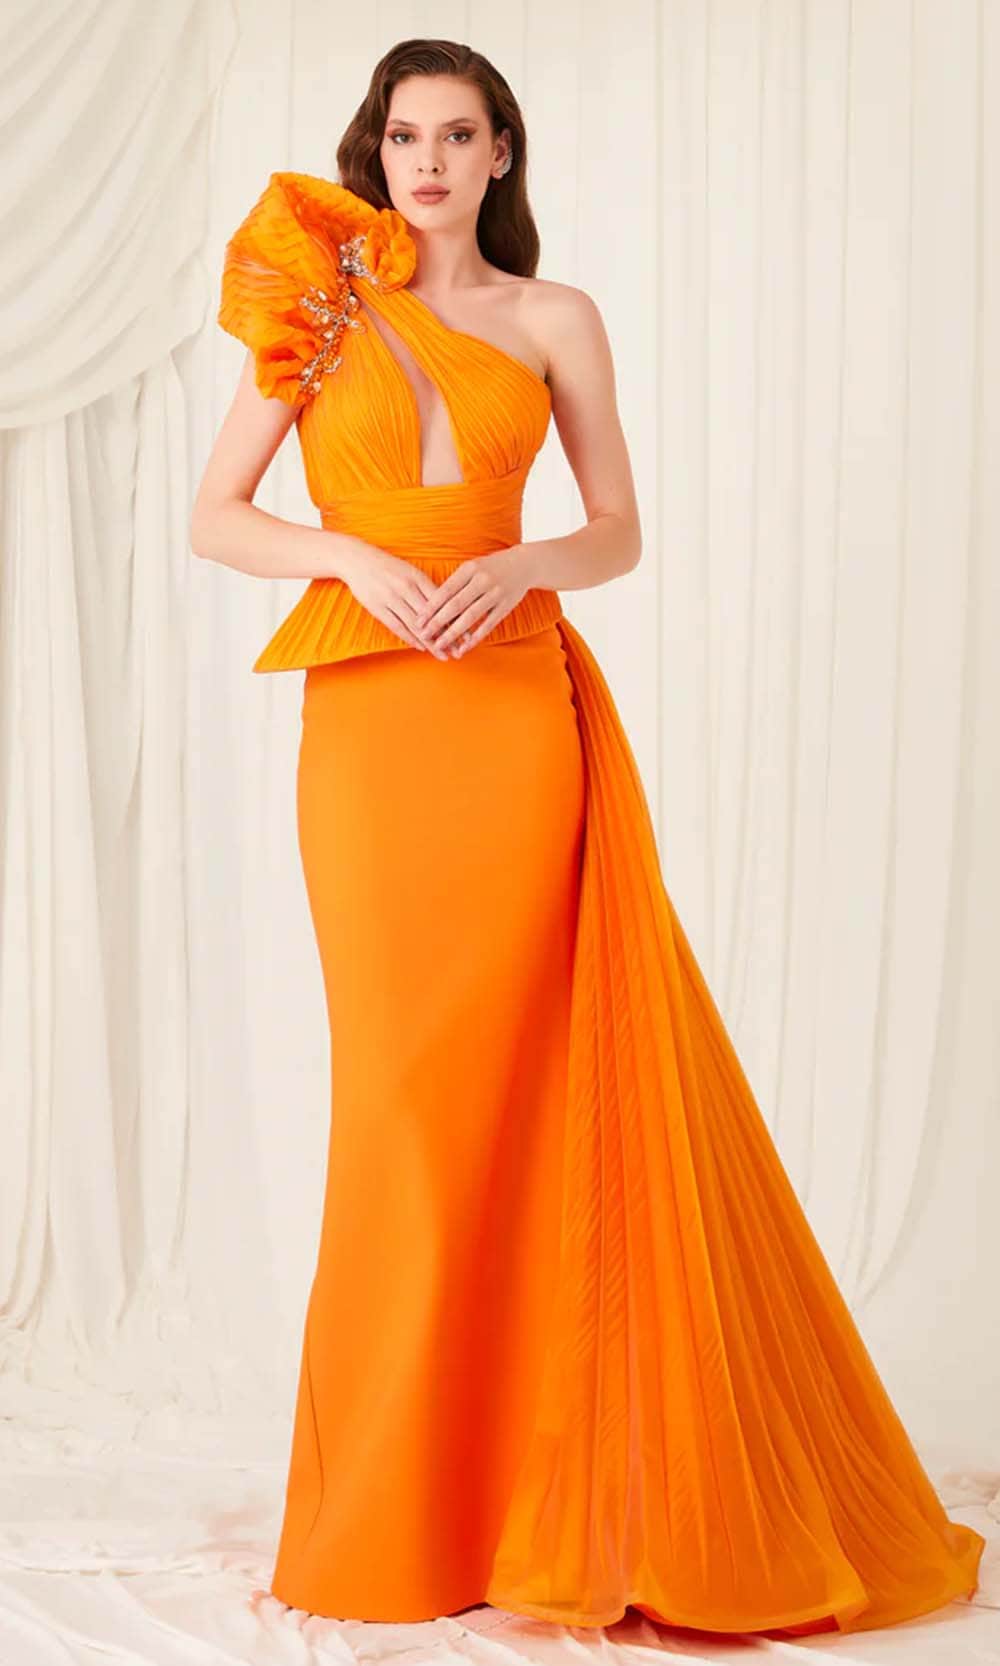 MNM Couture 2799A - Asymmetric Neck Peplum Evening Gown
